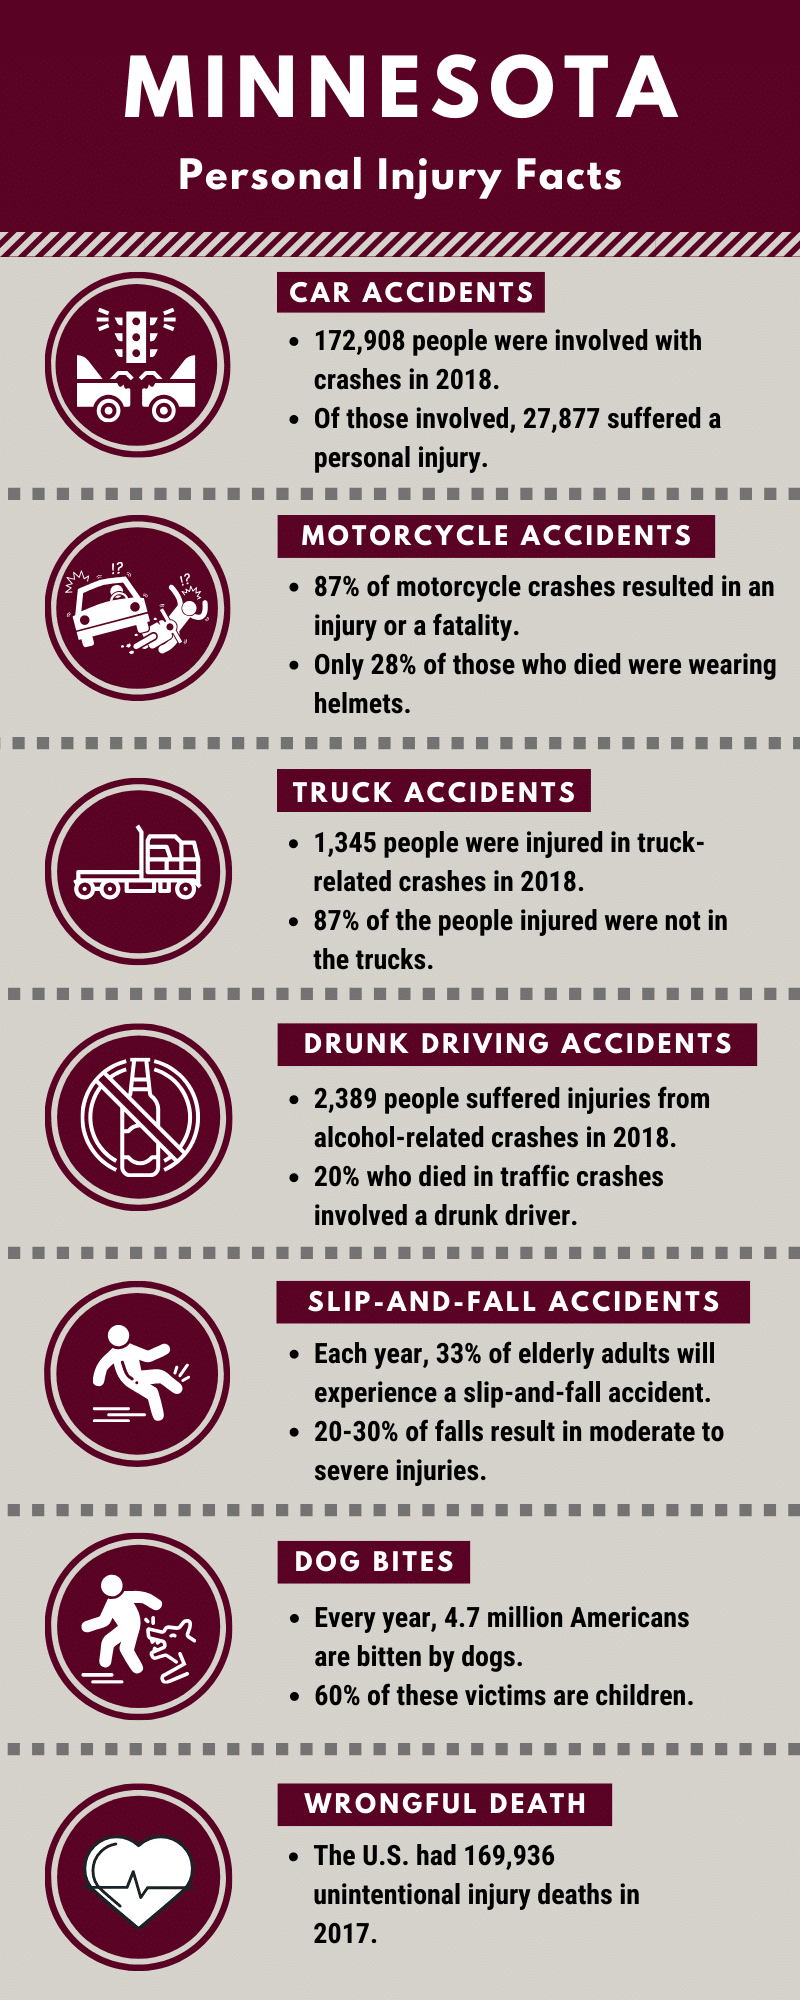 Minnesota personal injury facts